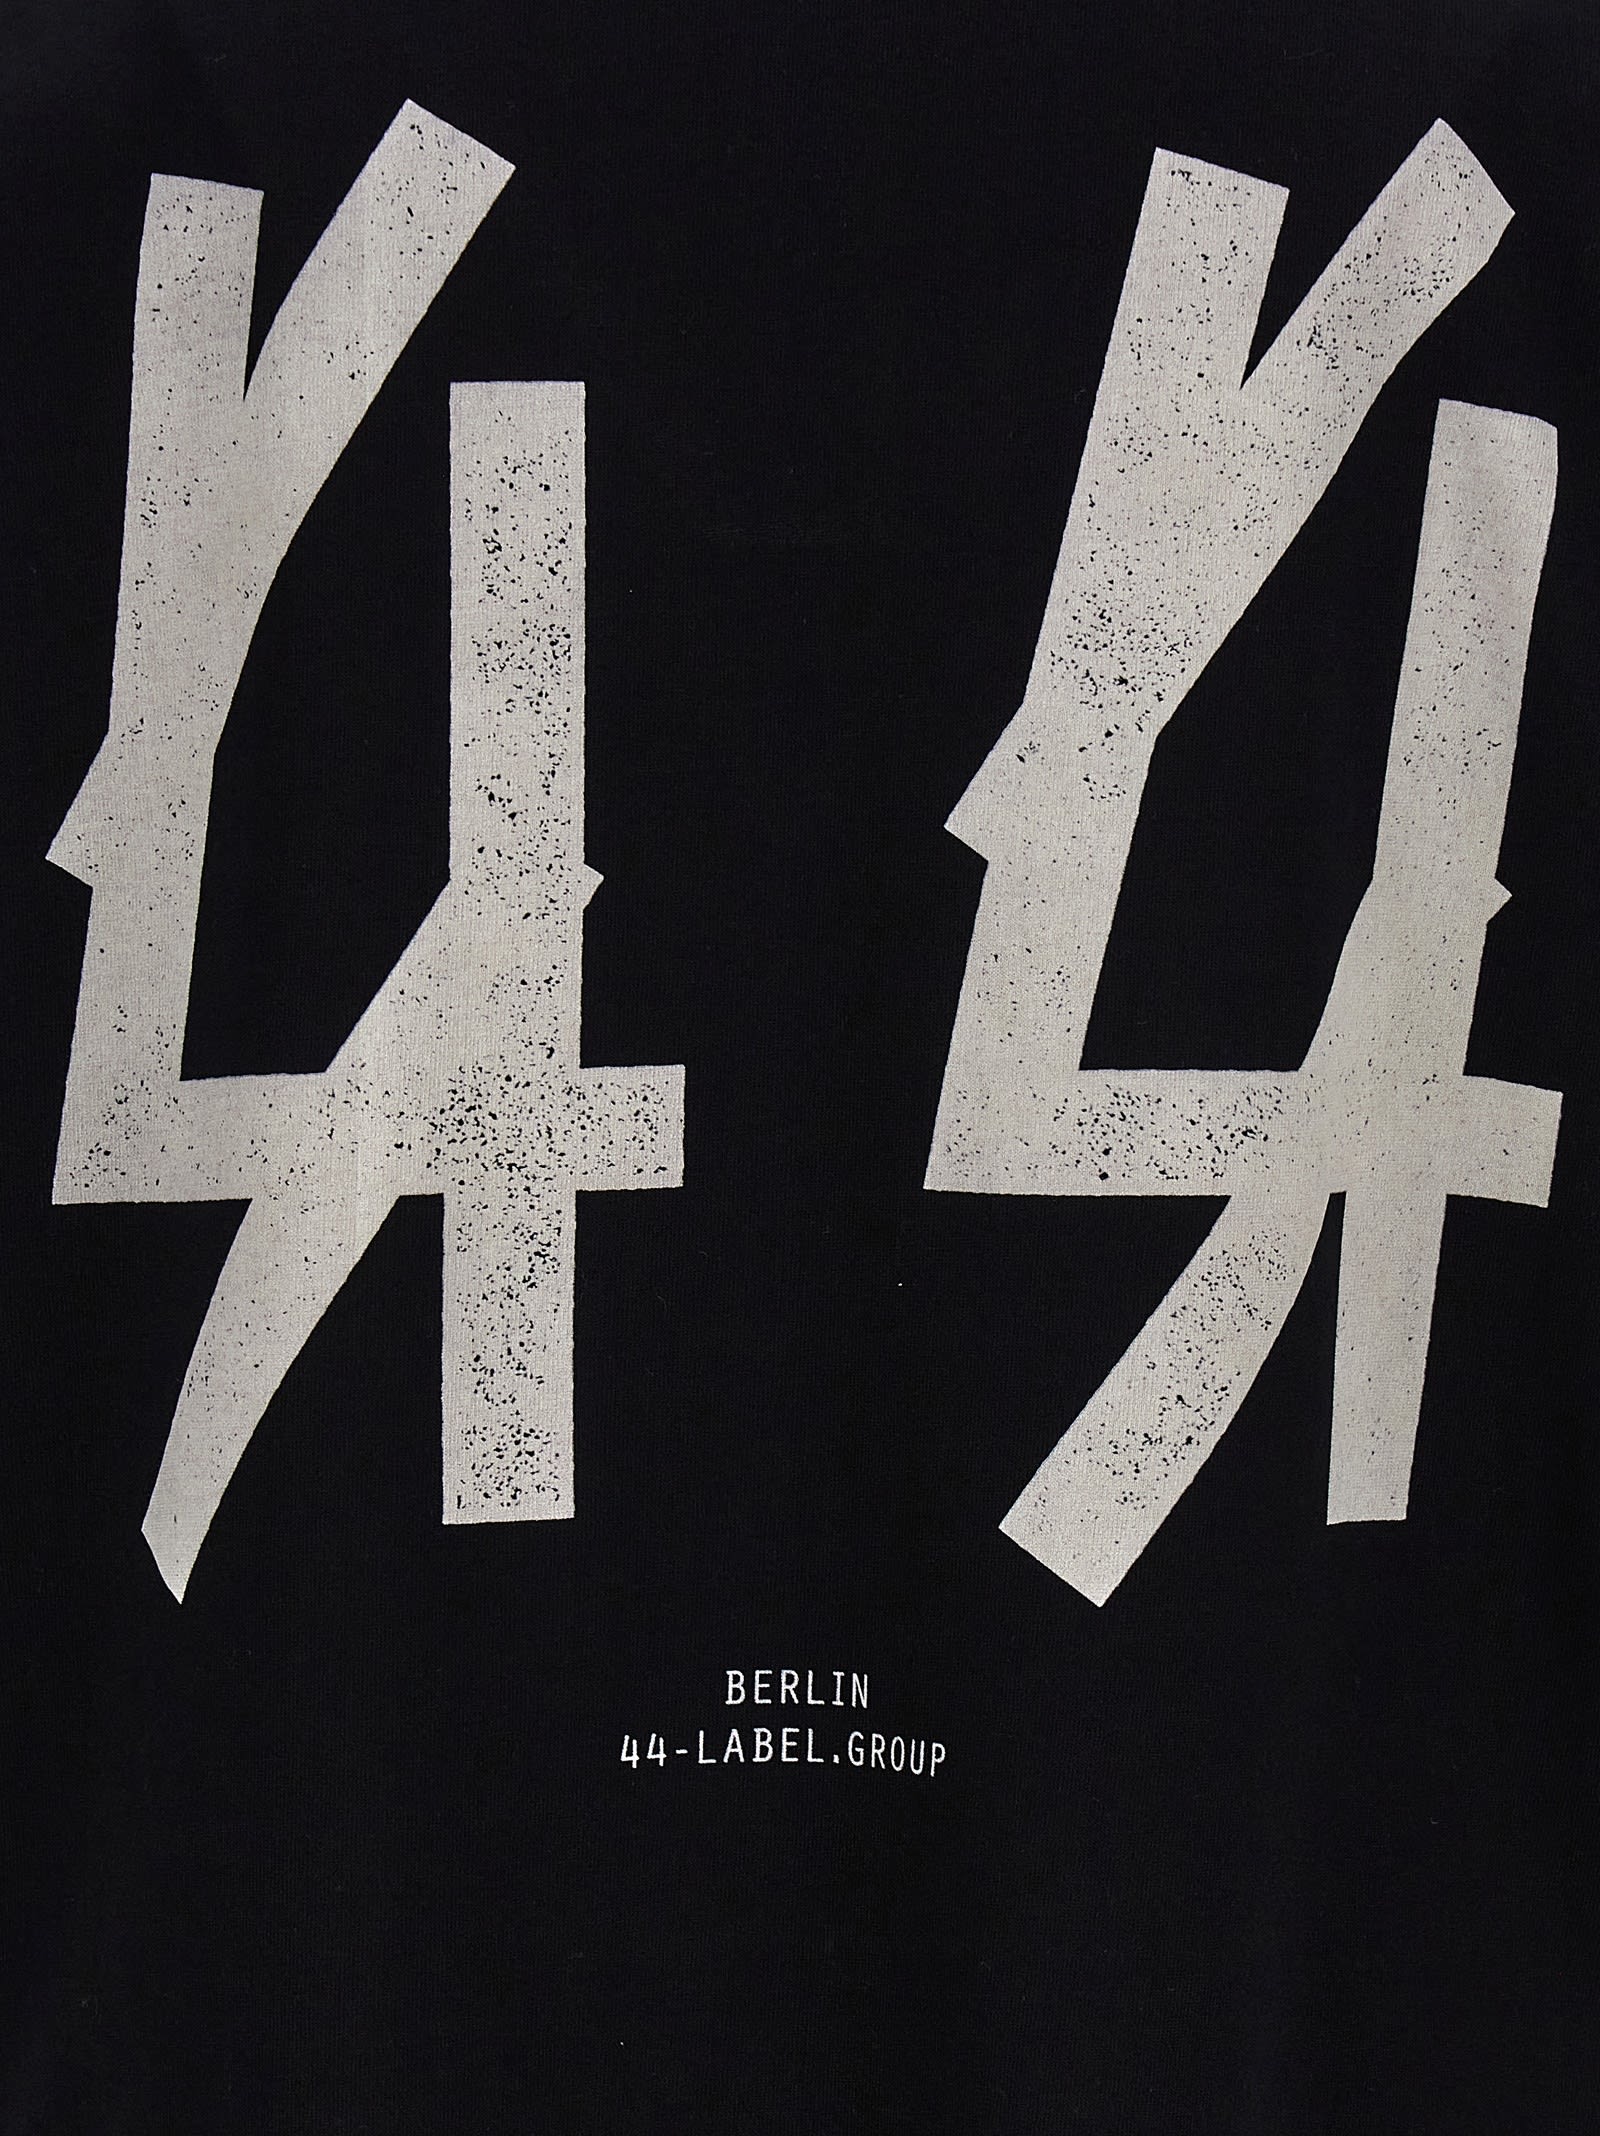 Shop 44 Label Group T-shirt Guestlist/berlin Sub T-shirt In Black